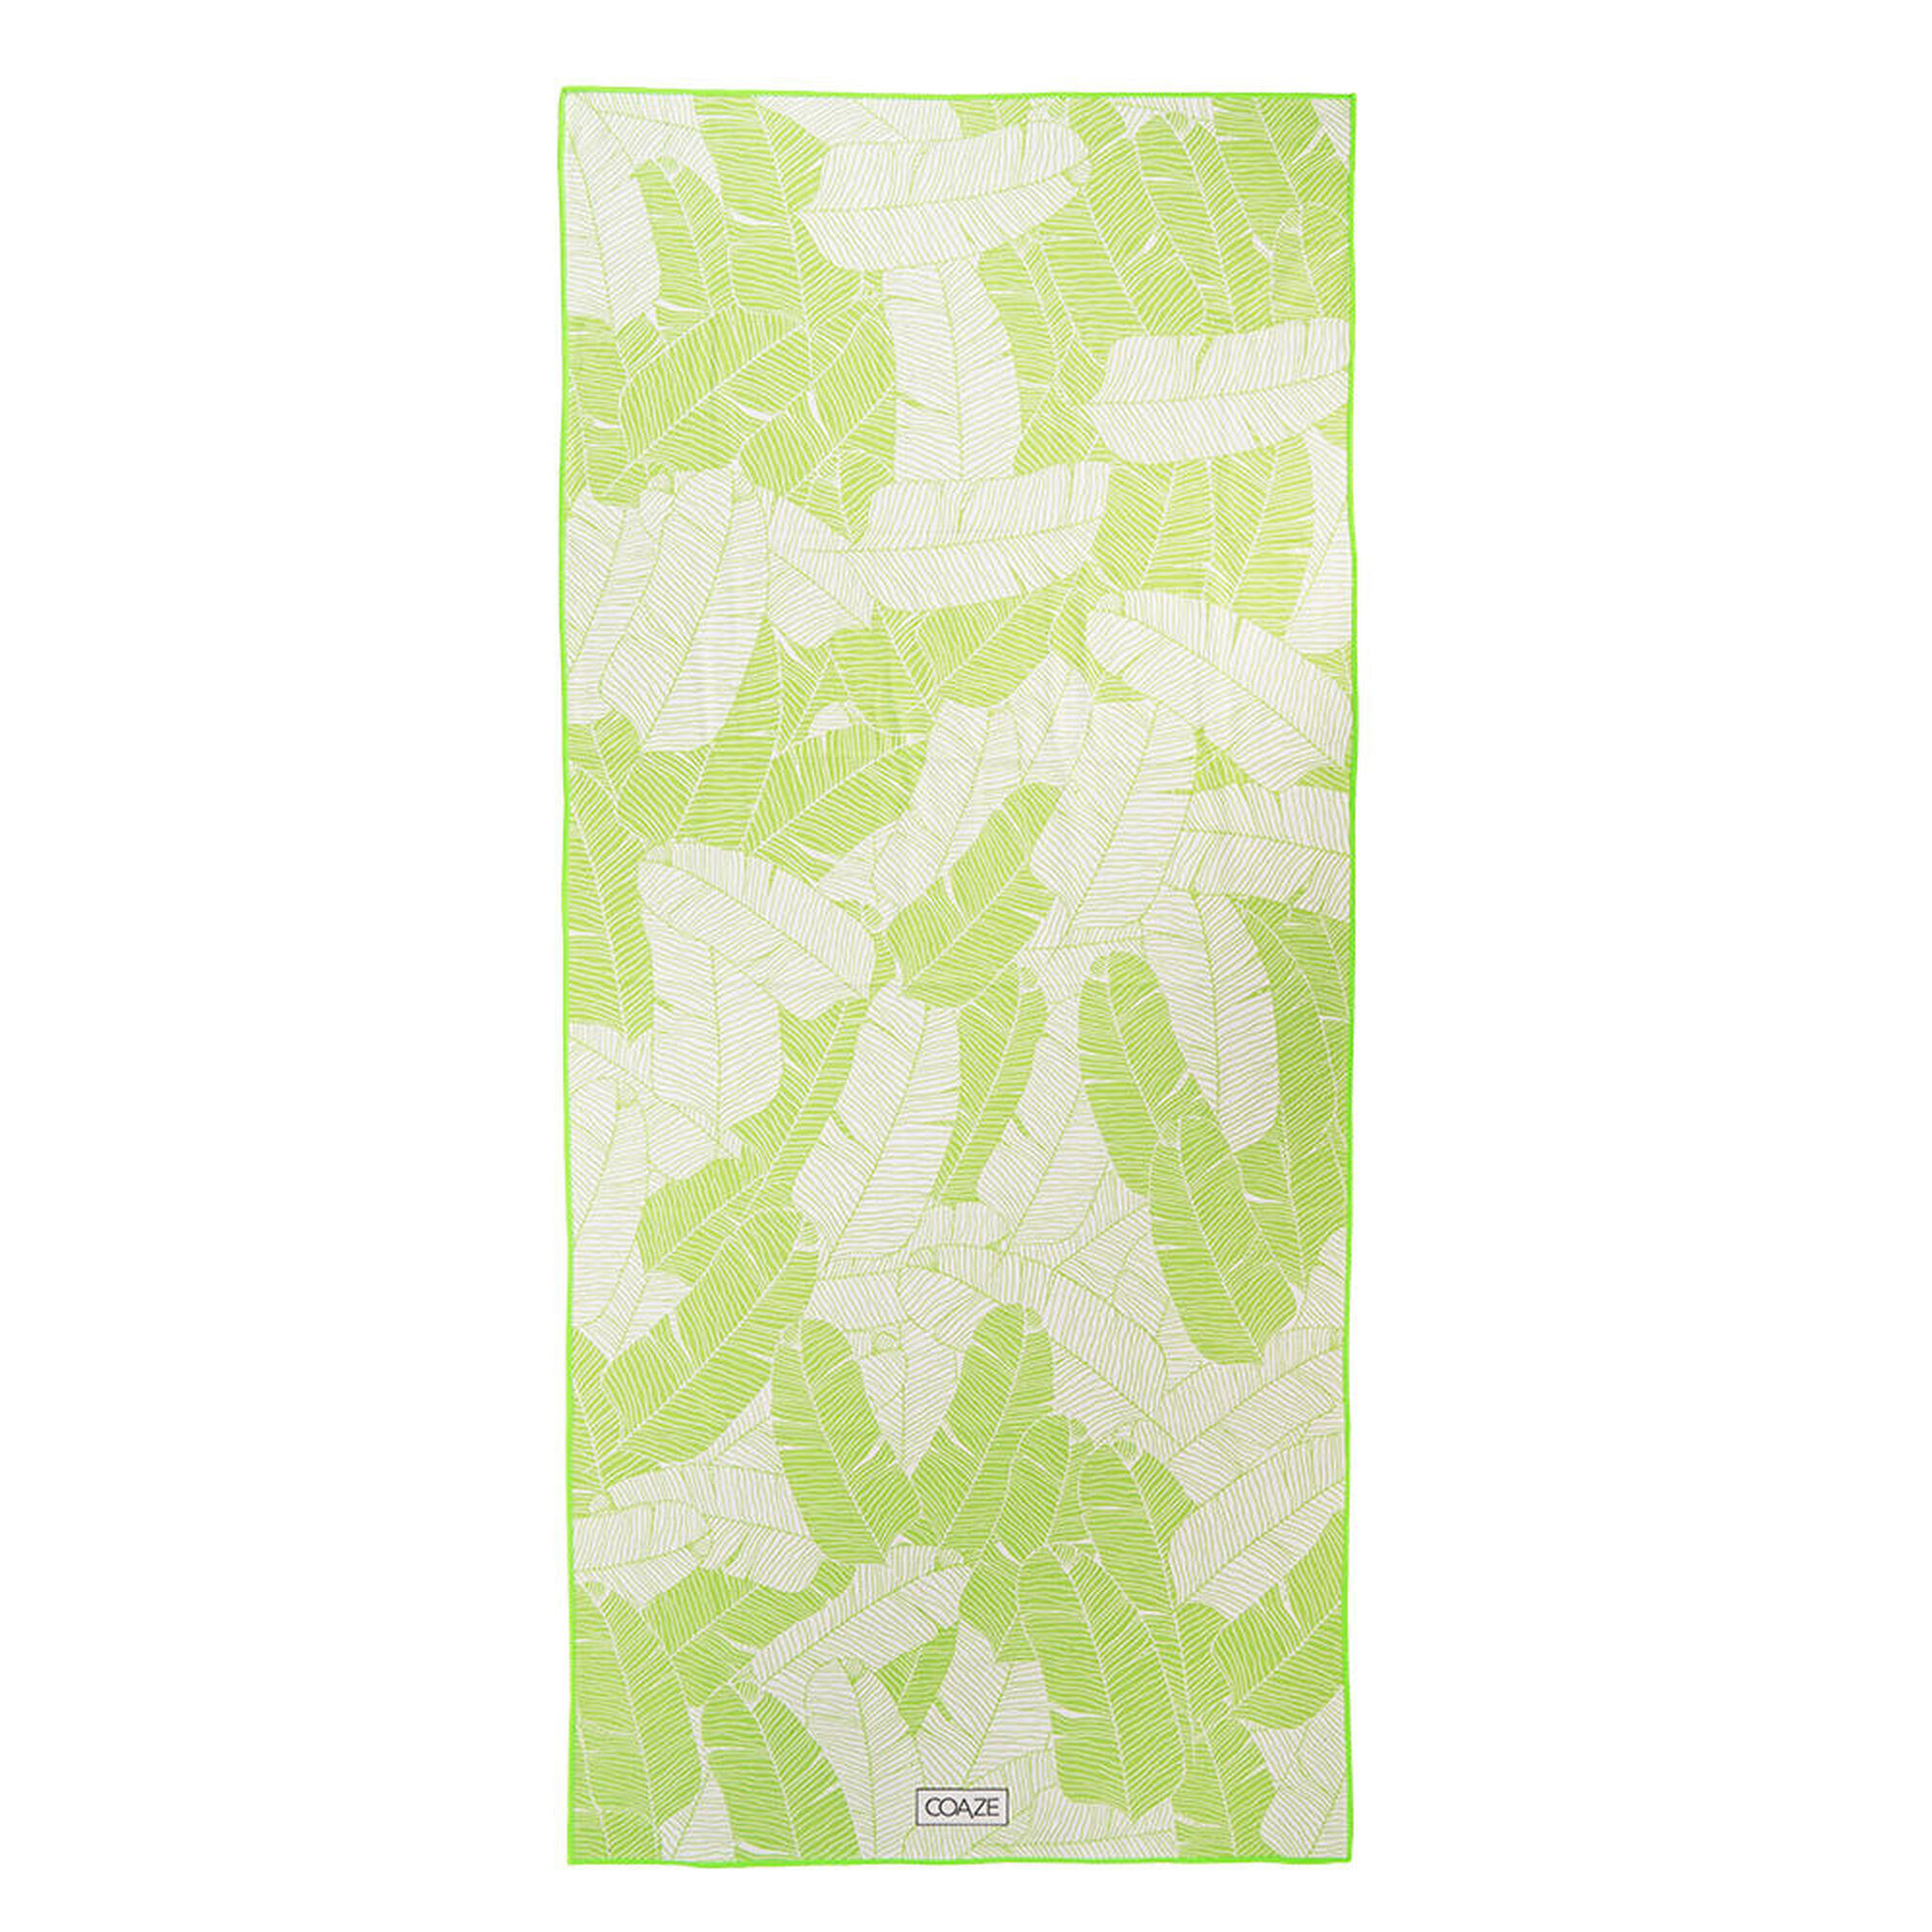 Unisex Sand Proof Sports Towel - Kiwi Leaves (Green)